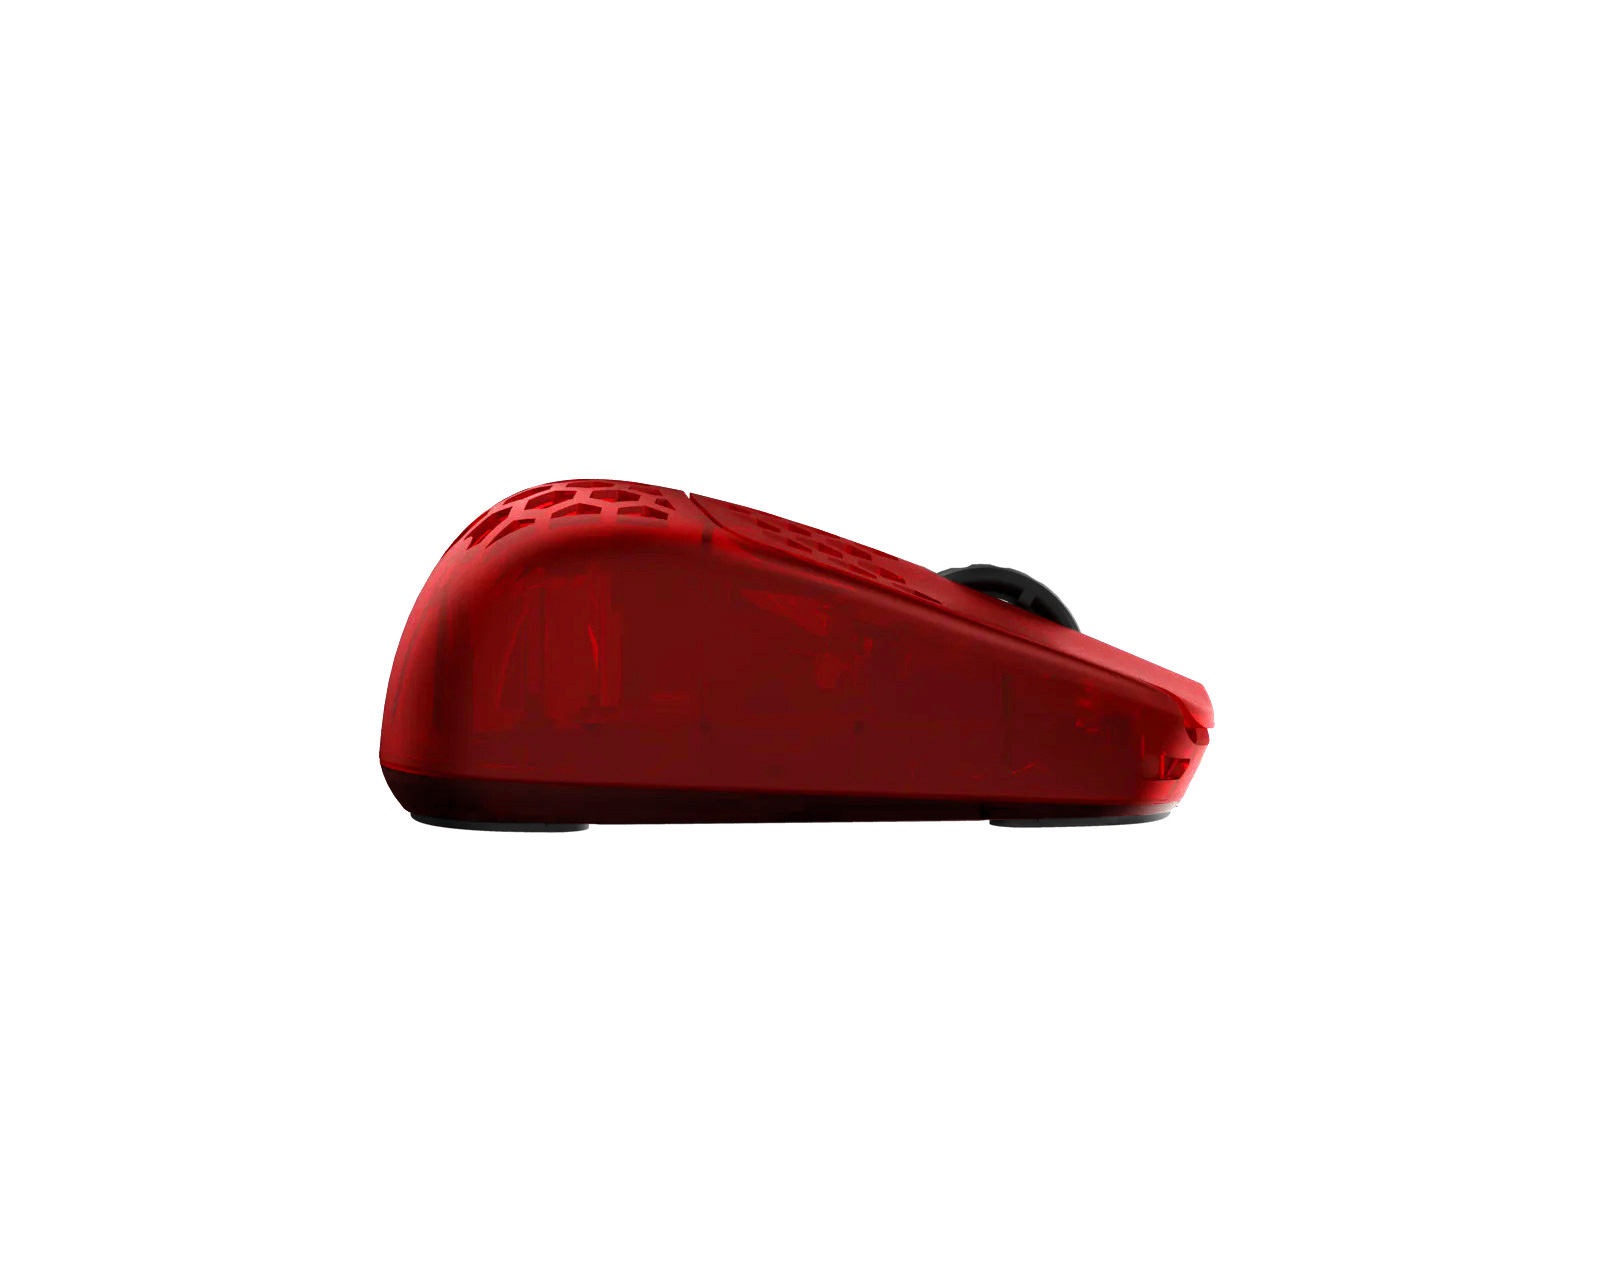 G-Wolves HSK Pro 4K Wireless Mouse Fingertip - Ruby Red